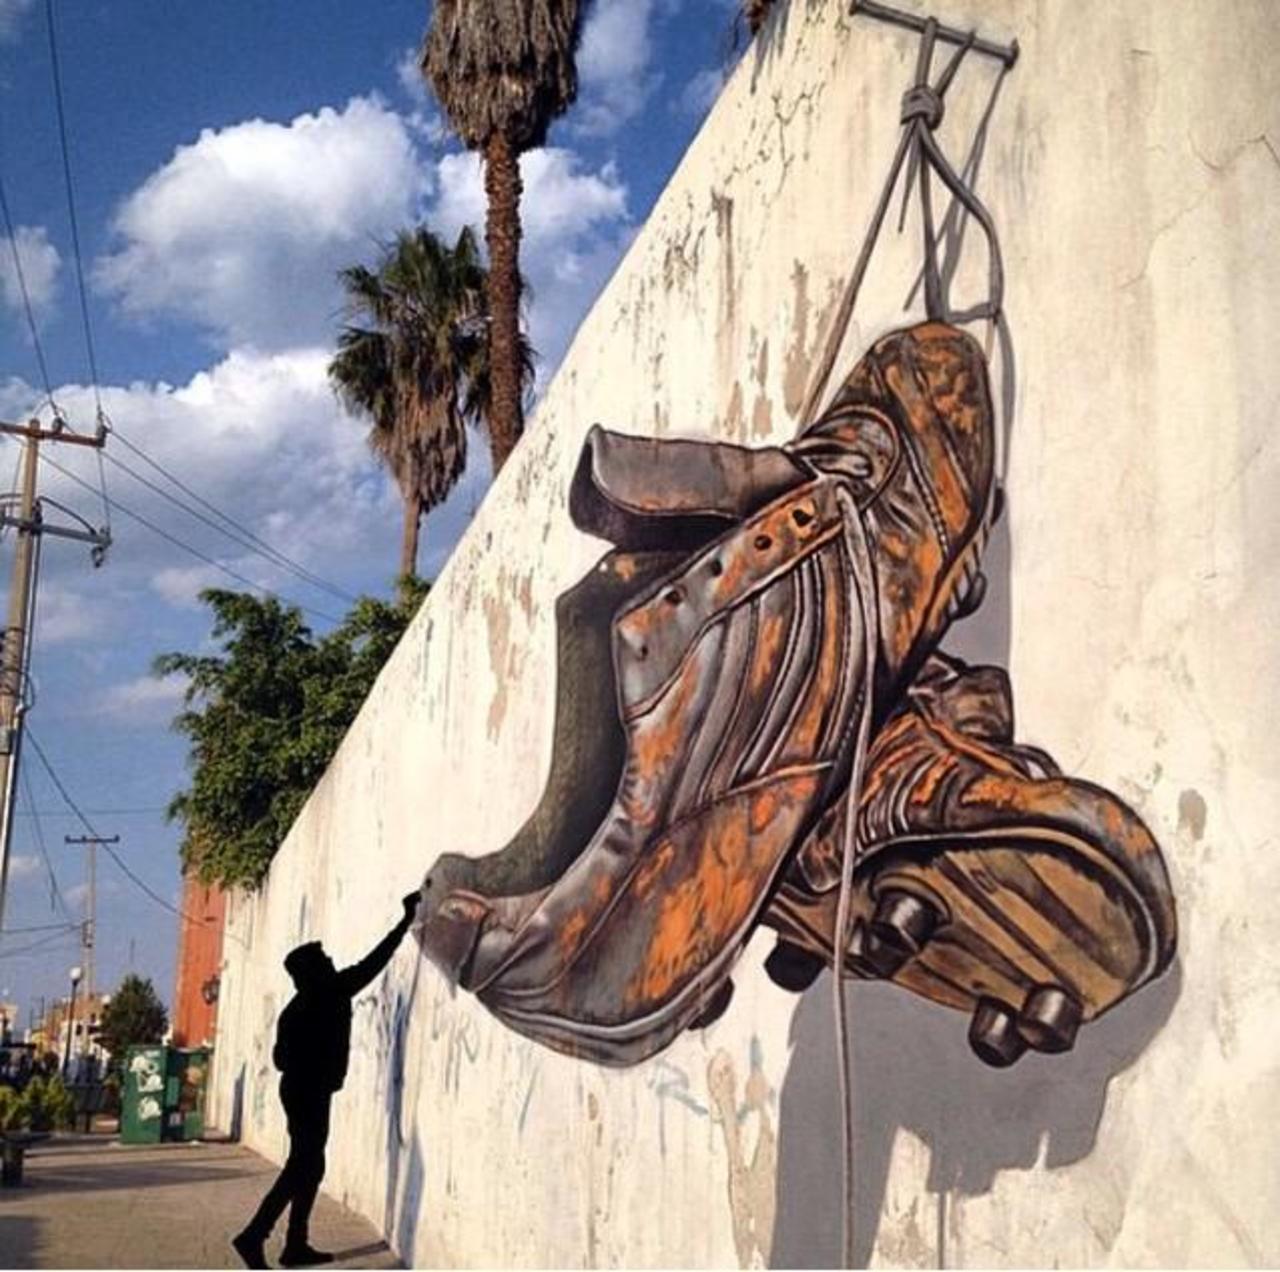 Awesome anamorphic 3D Street Art by Juandres Vera 

#art #graffiti #mural #streetart http://t.co/YIInjeDku2 From: GoogleStreetArt